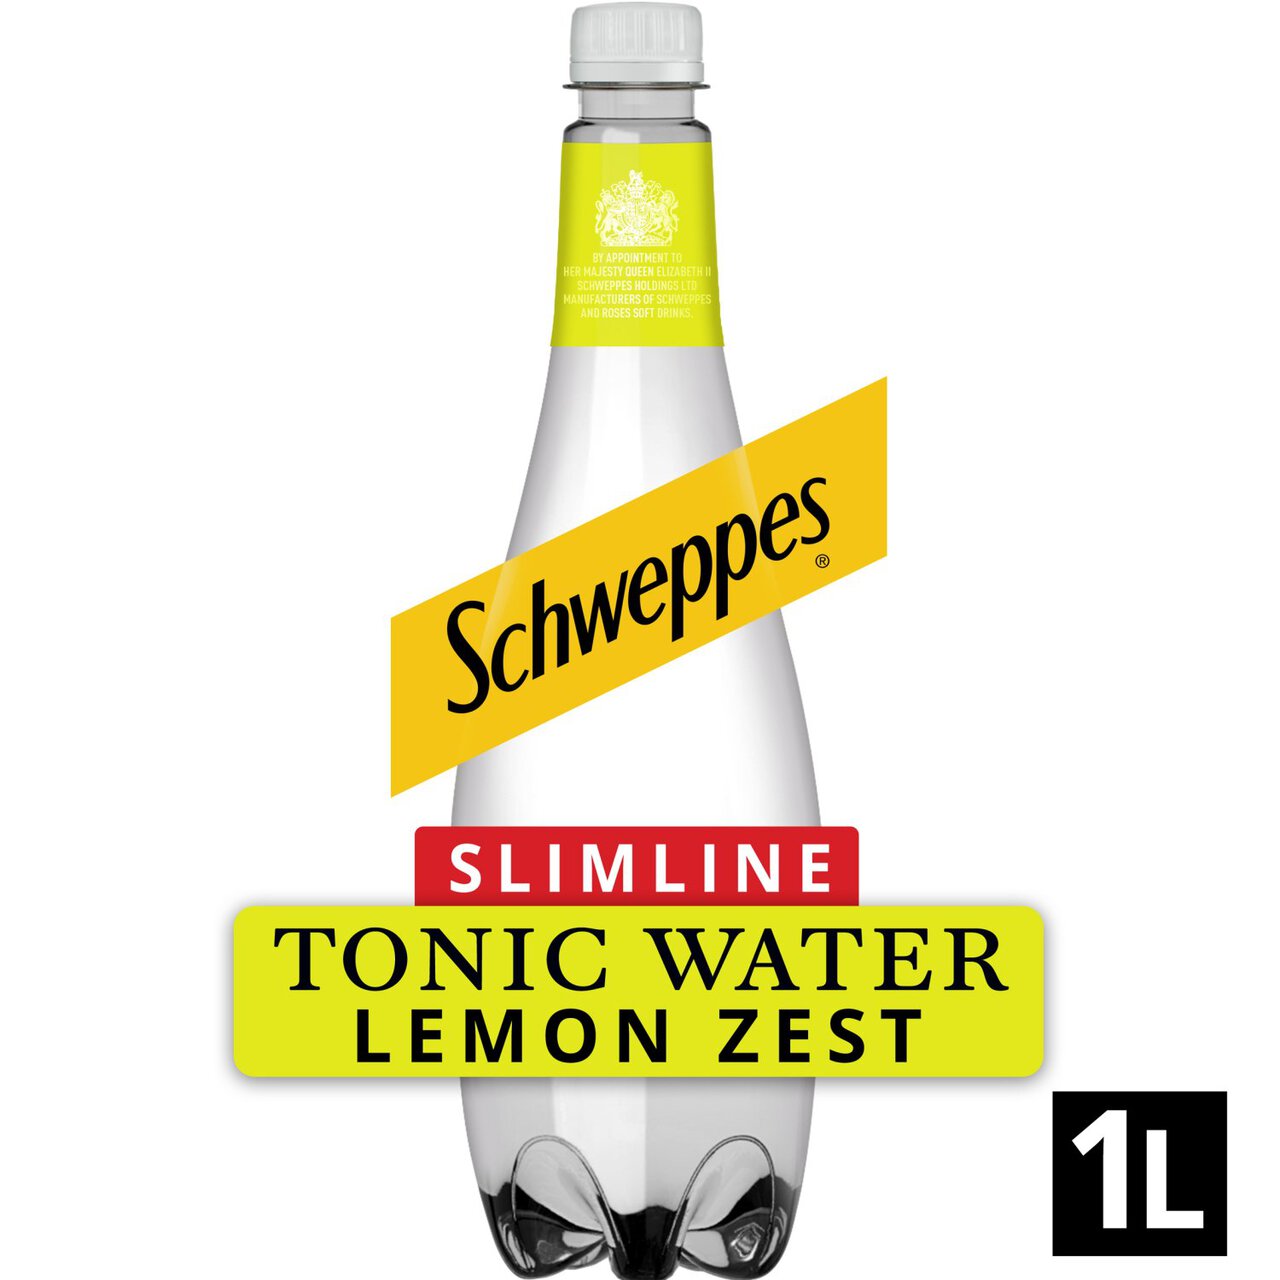 Schweppes Slimline Tonic with Zest of Lemon 1l